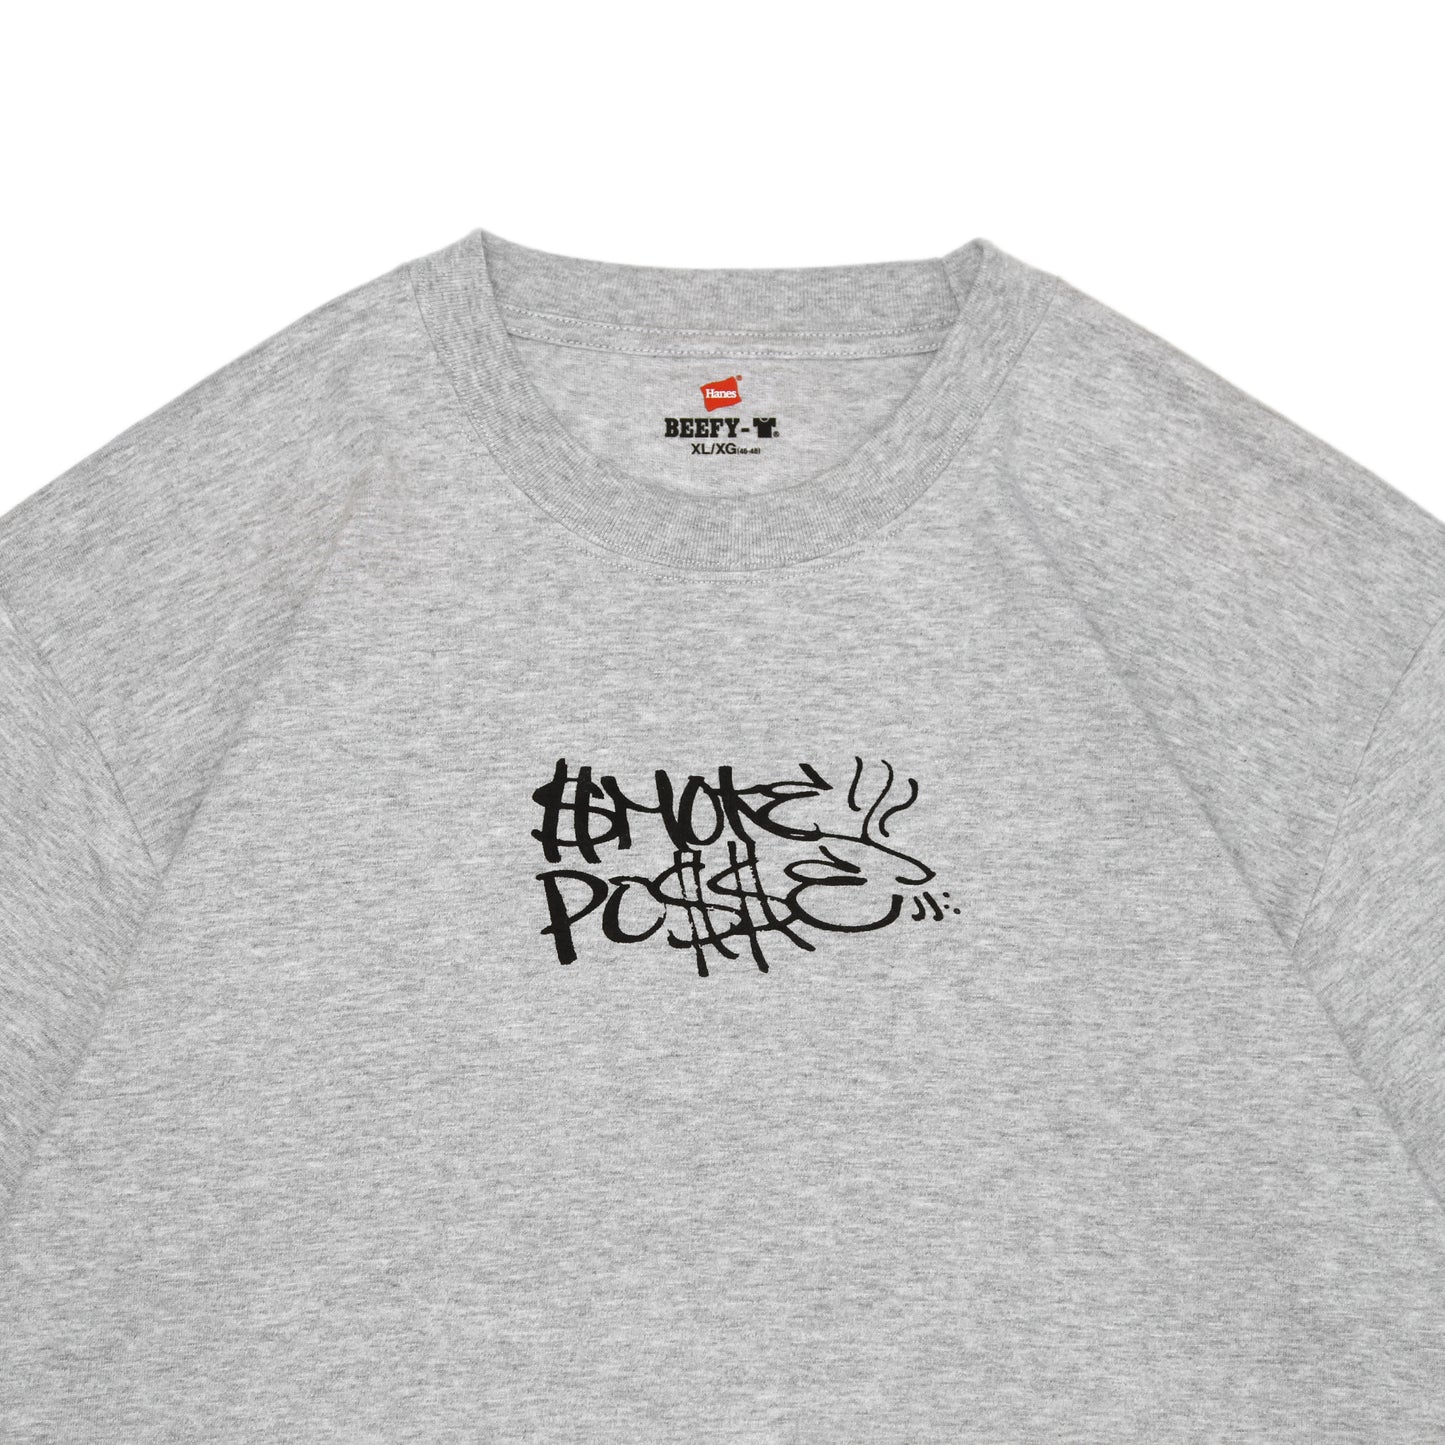 SMOKE POSSE - Low Dawn and Dirty T-Shirt/Grey